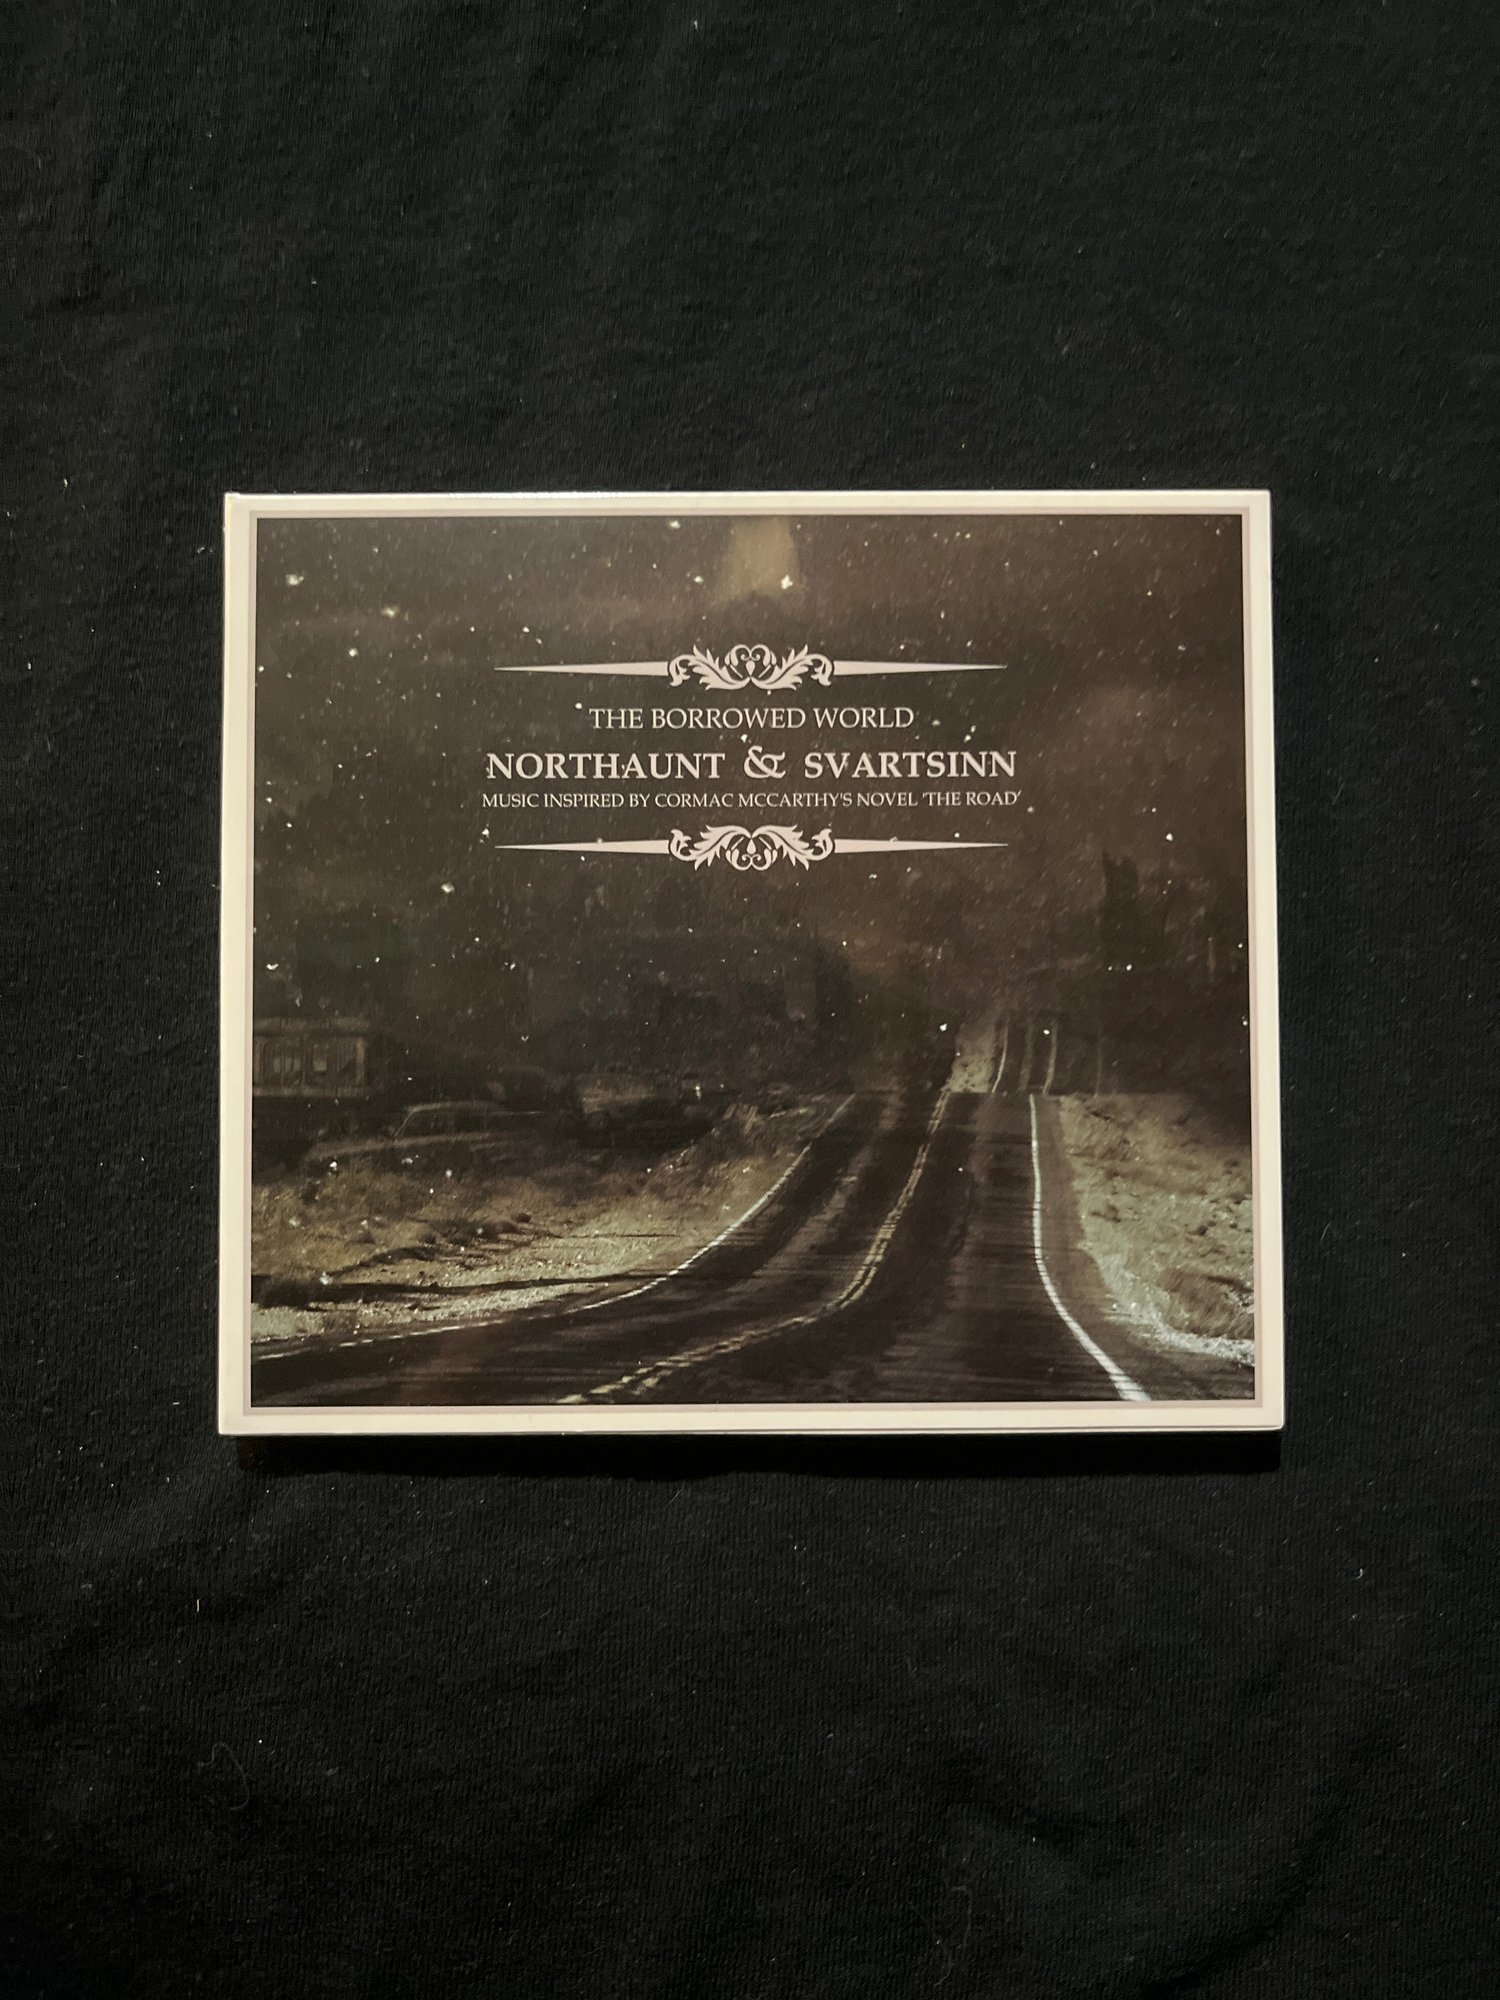 Northaunt & Svartsinn - The Borrowed World CD (Loki)